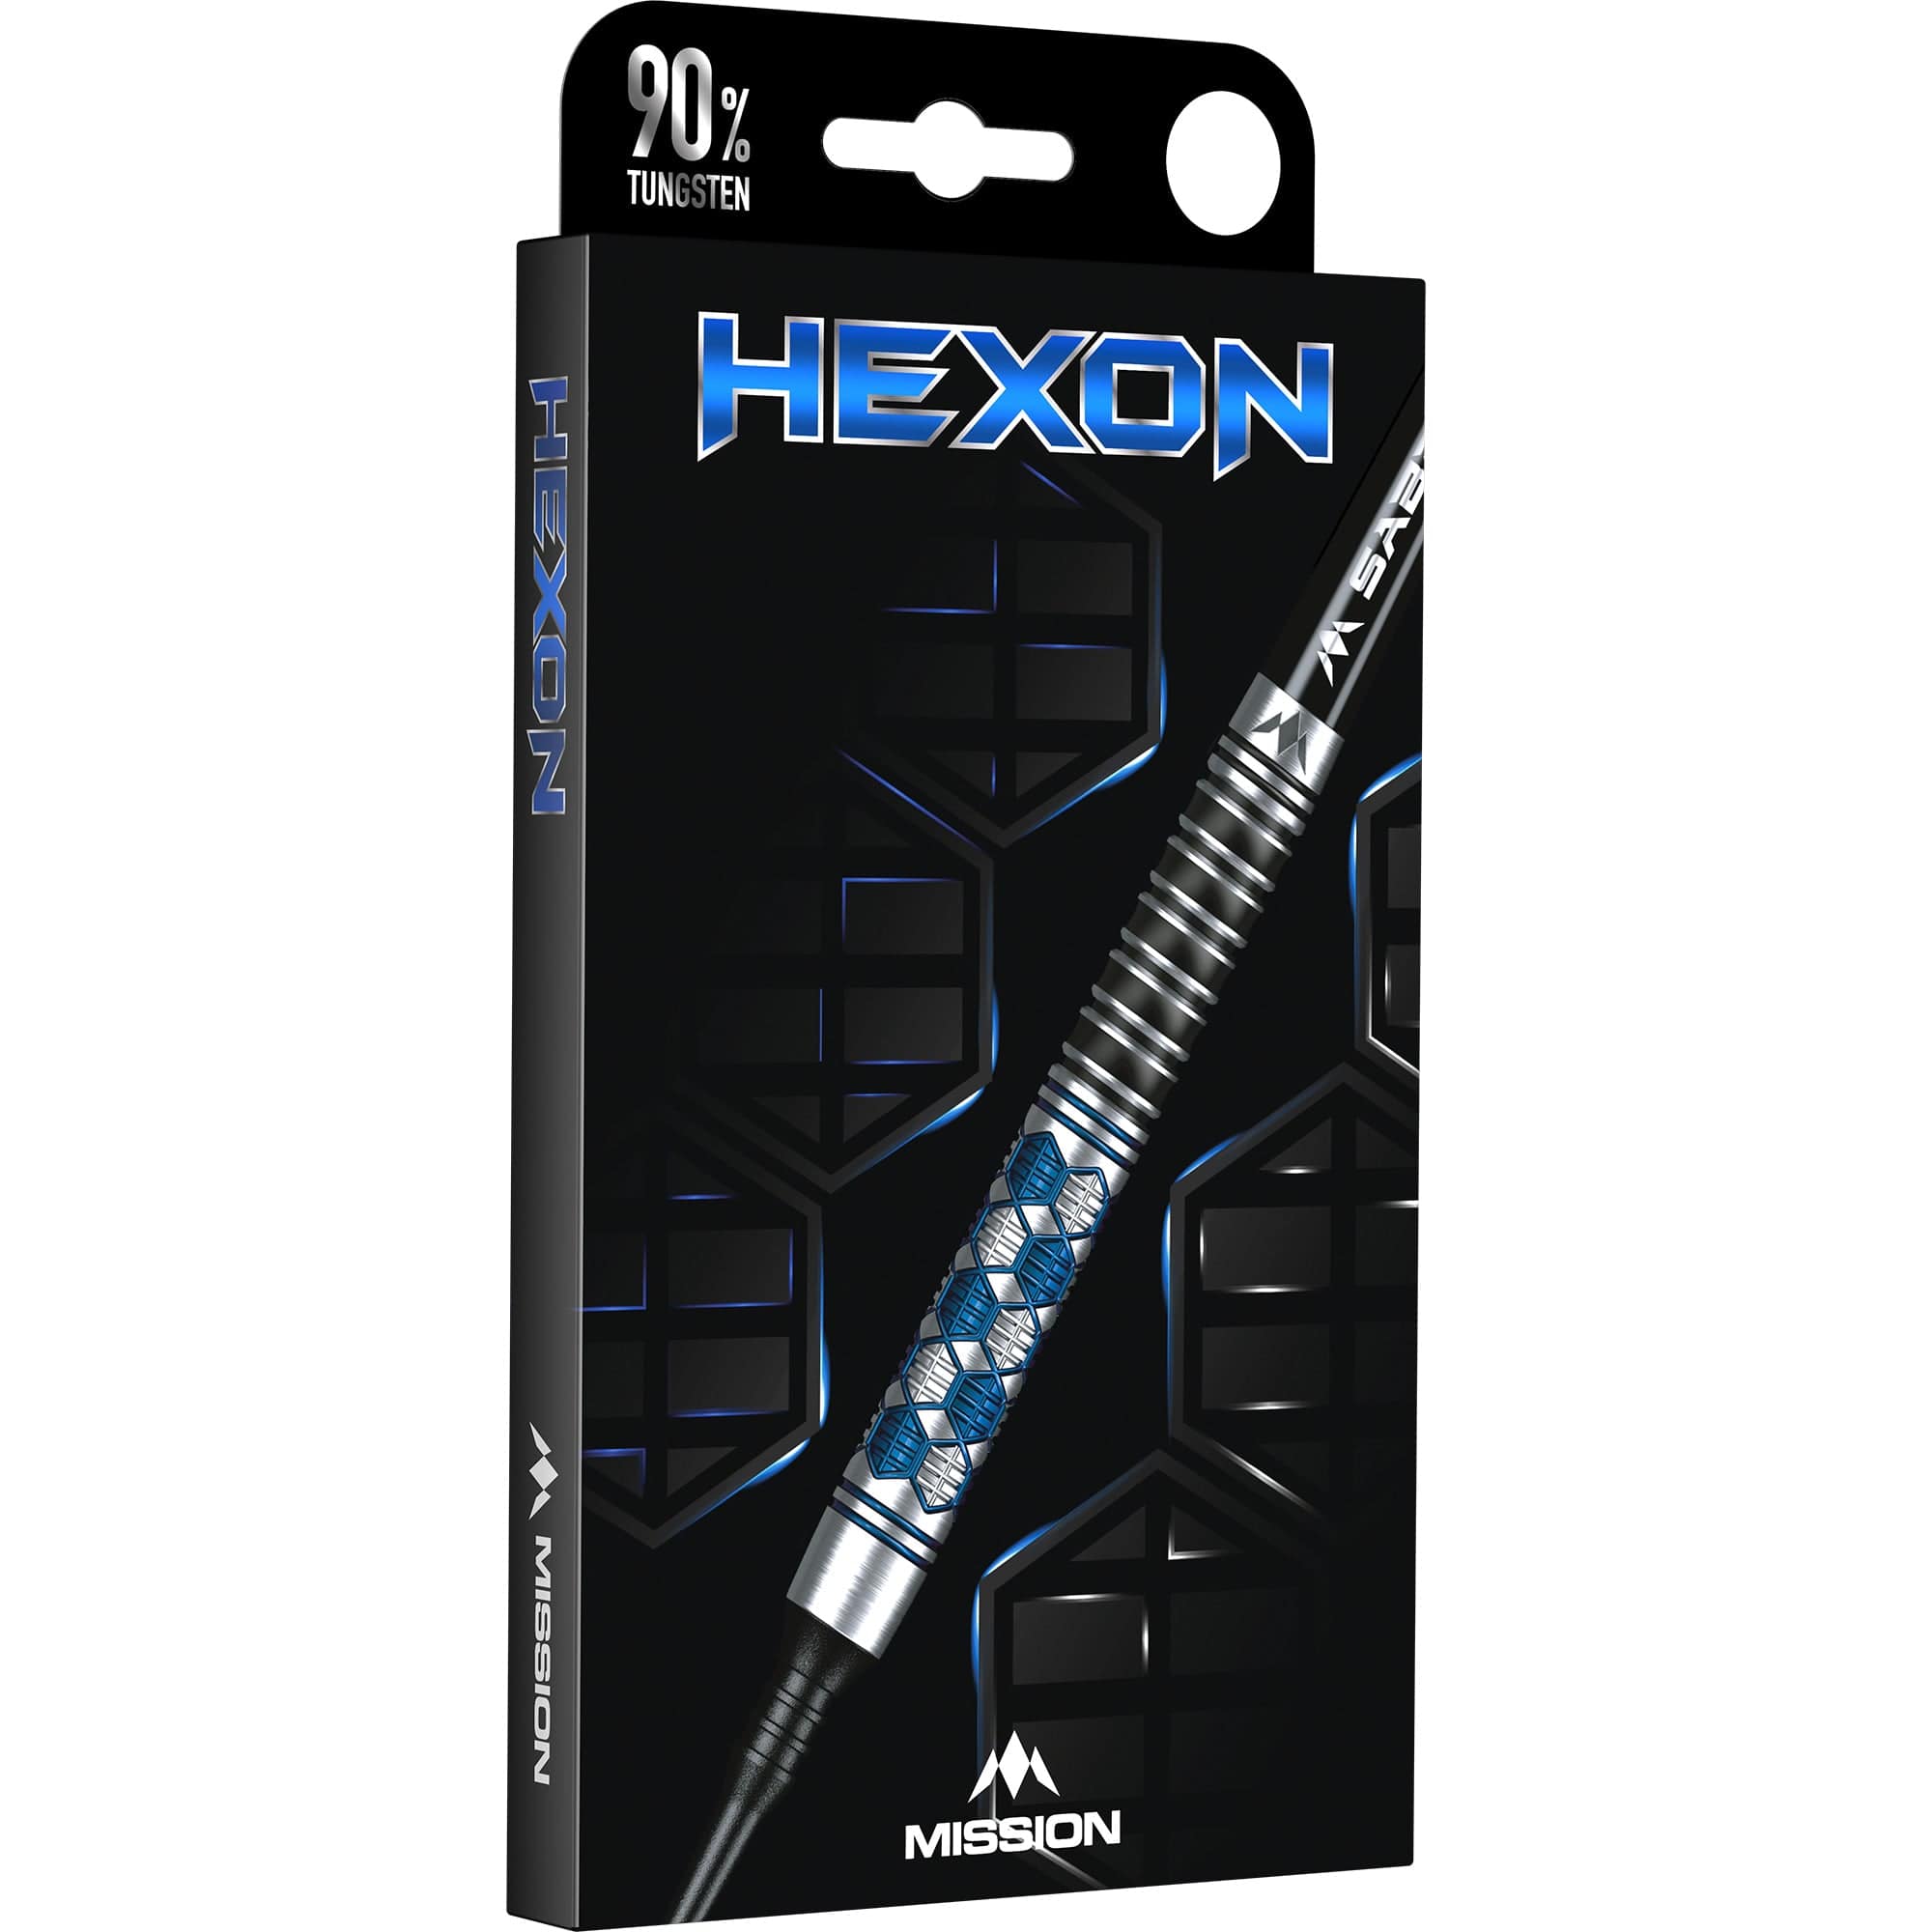 Mission Hexon Darts - Soft Tip - 90% - Blue PVD 18g